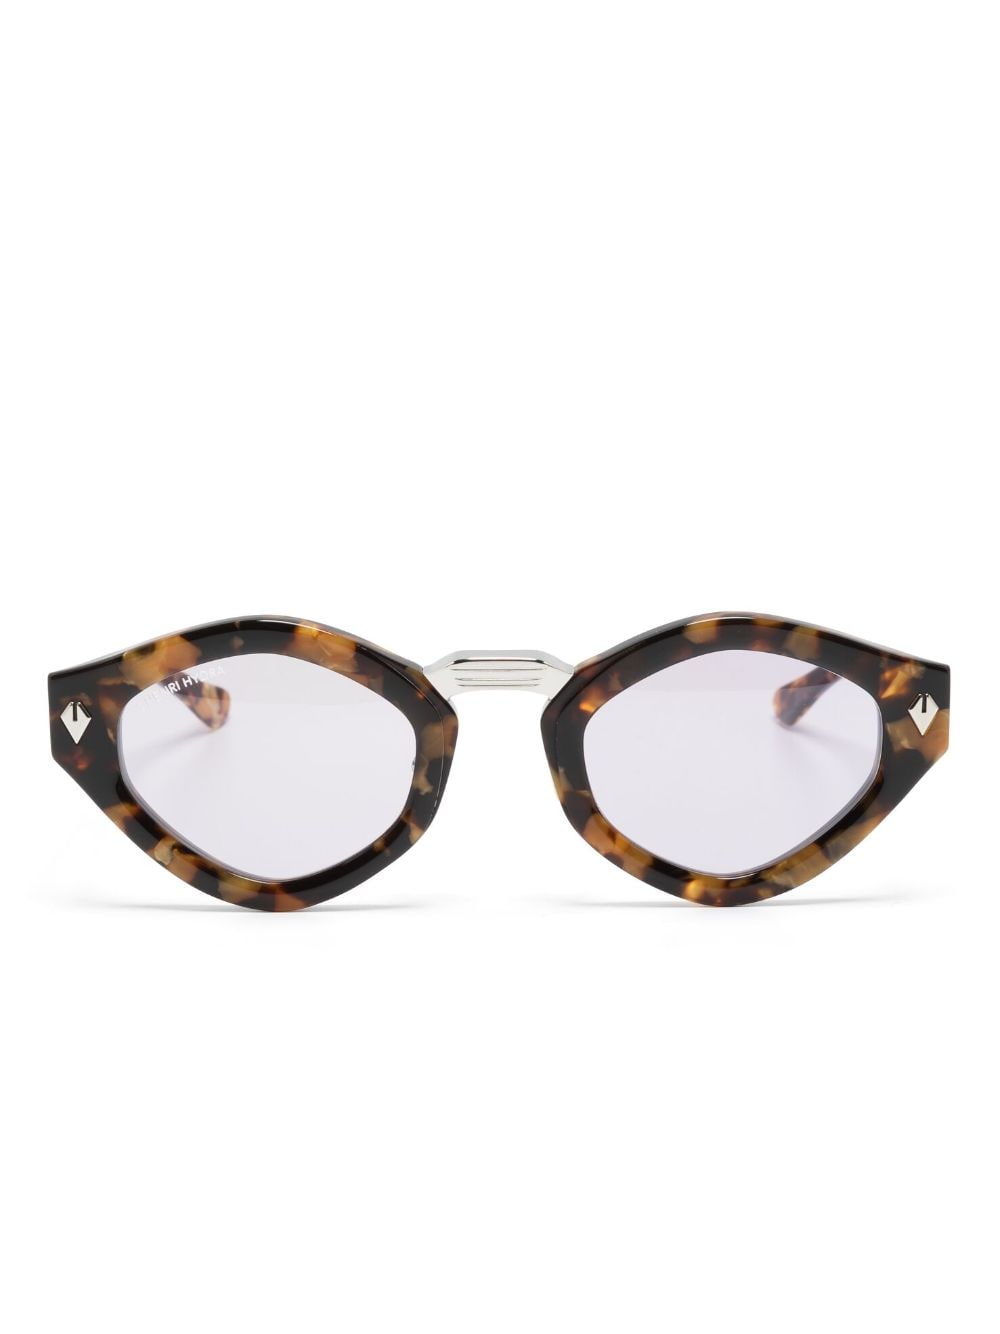 T Henri Eyewear tortoiseshell-effect tinted sunglasses - Brown von T Henri Eyewear